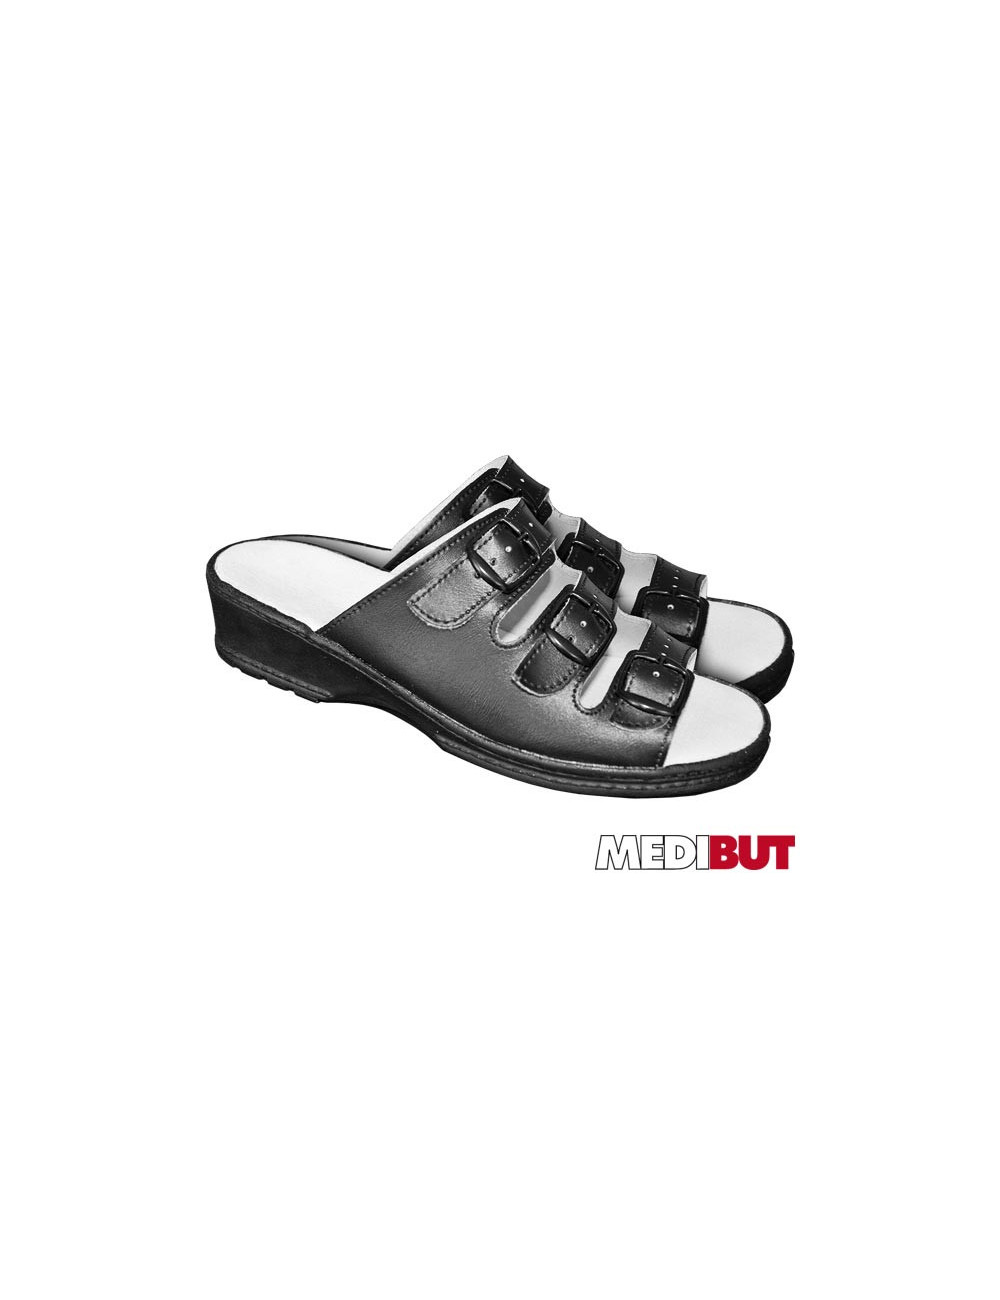 Occupational shoes bmbioform b black Medibut